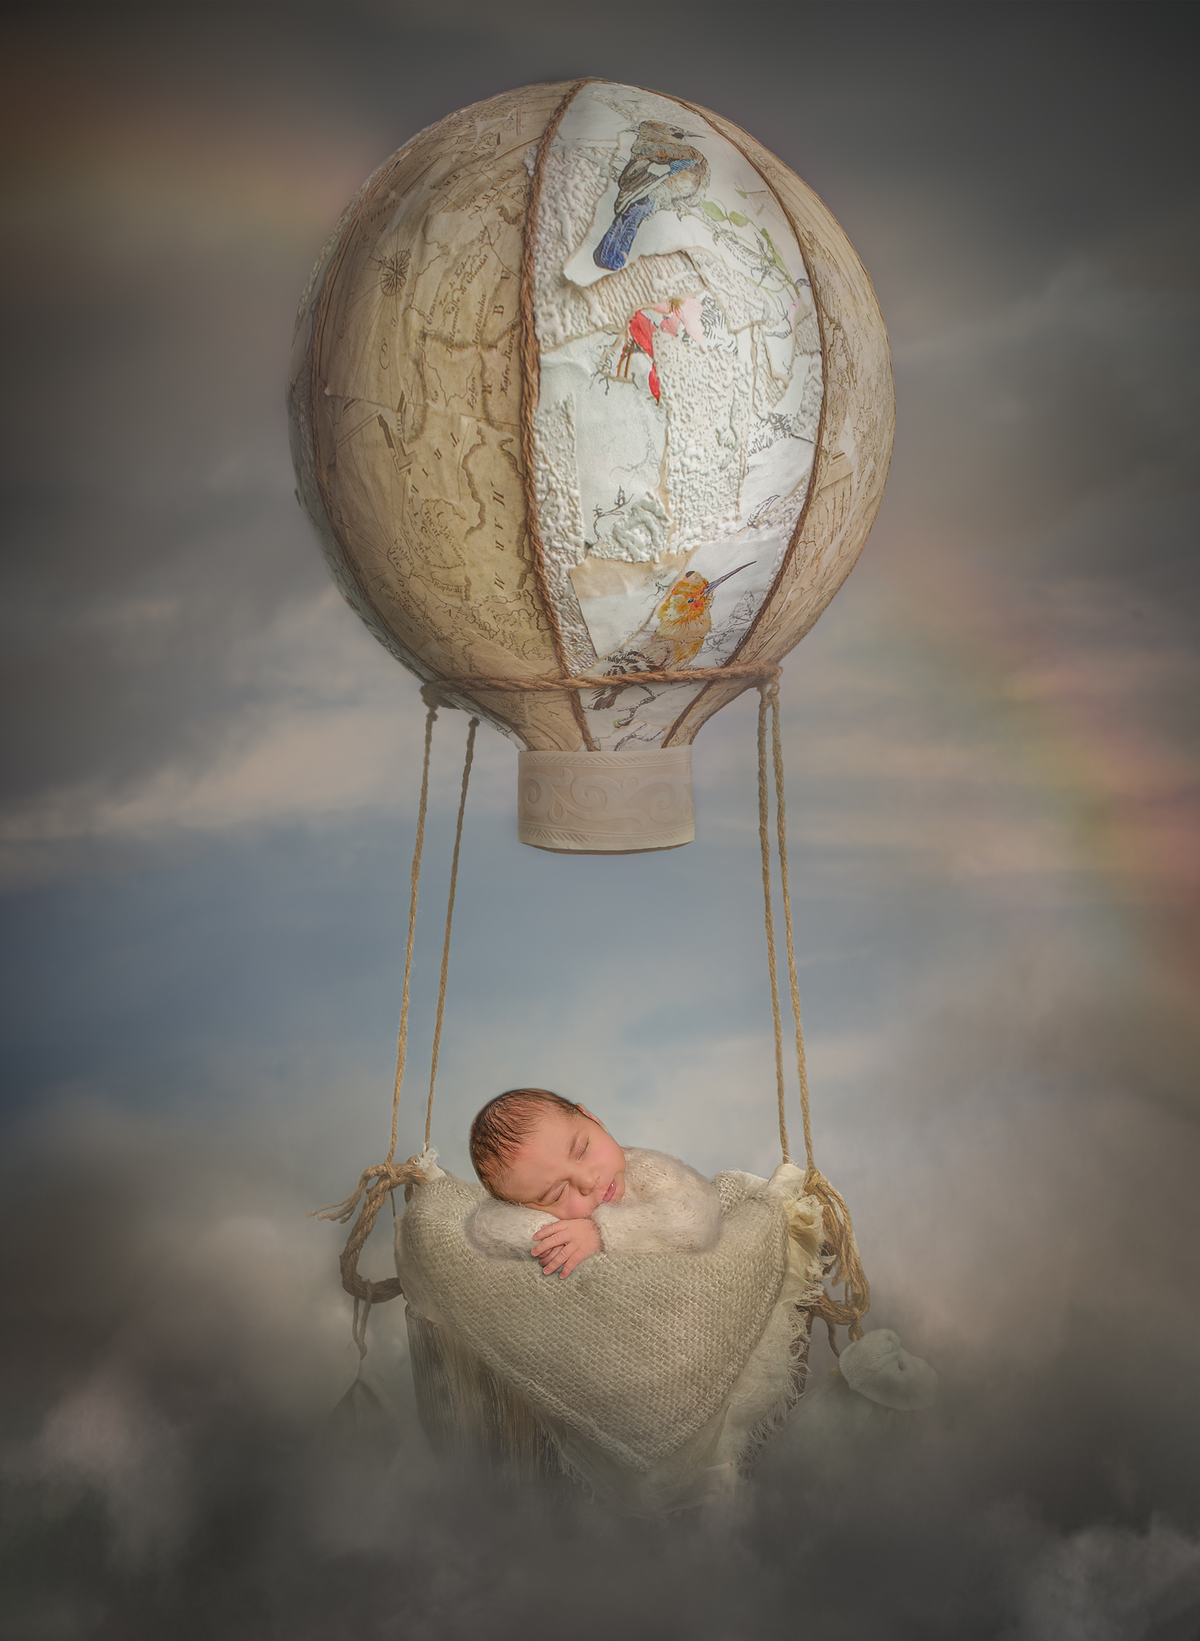 creative air hot balloon newborn portrait taken during his newborn session in Ottawa Ontario